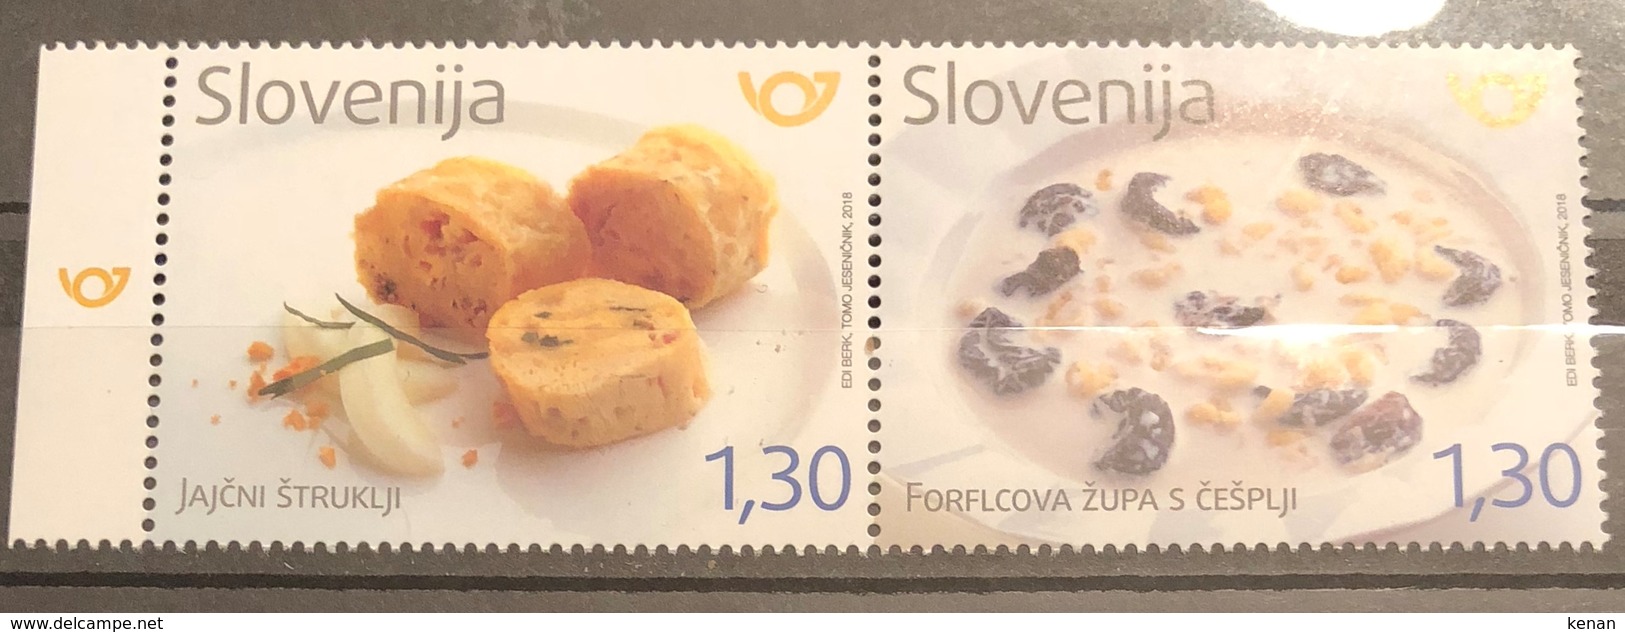 Slovenia, 2018, Gastronomy (MNH) - Eslovenia